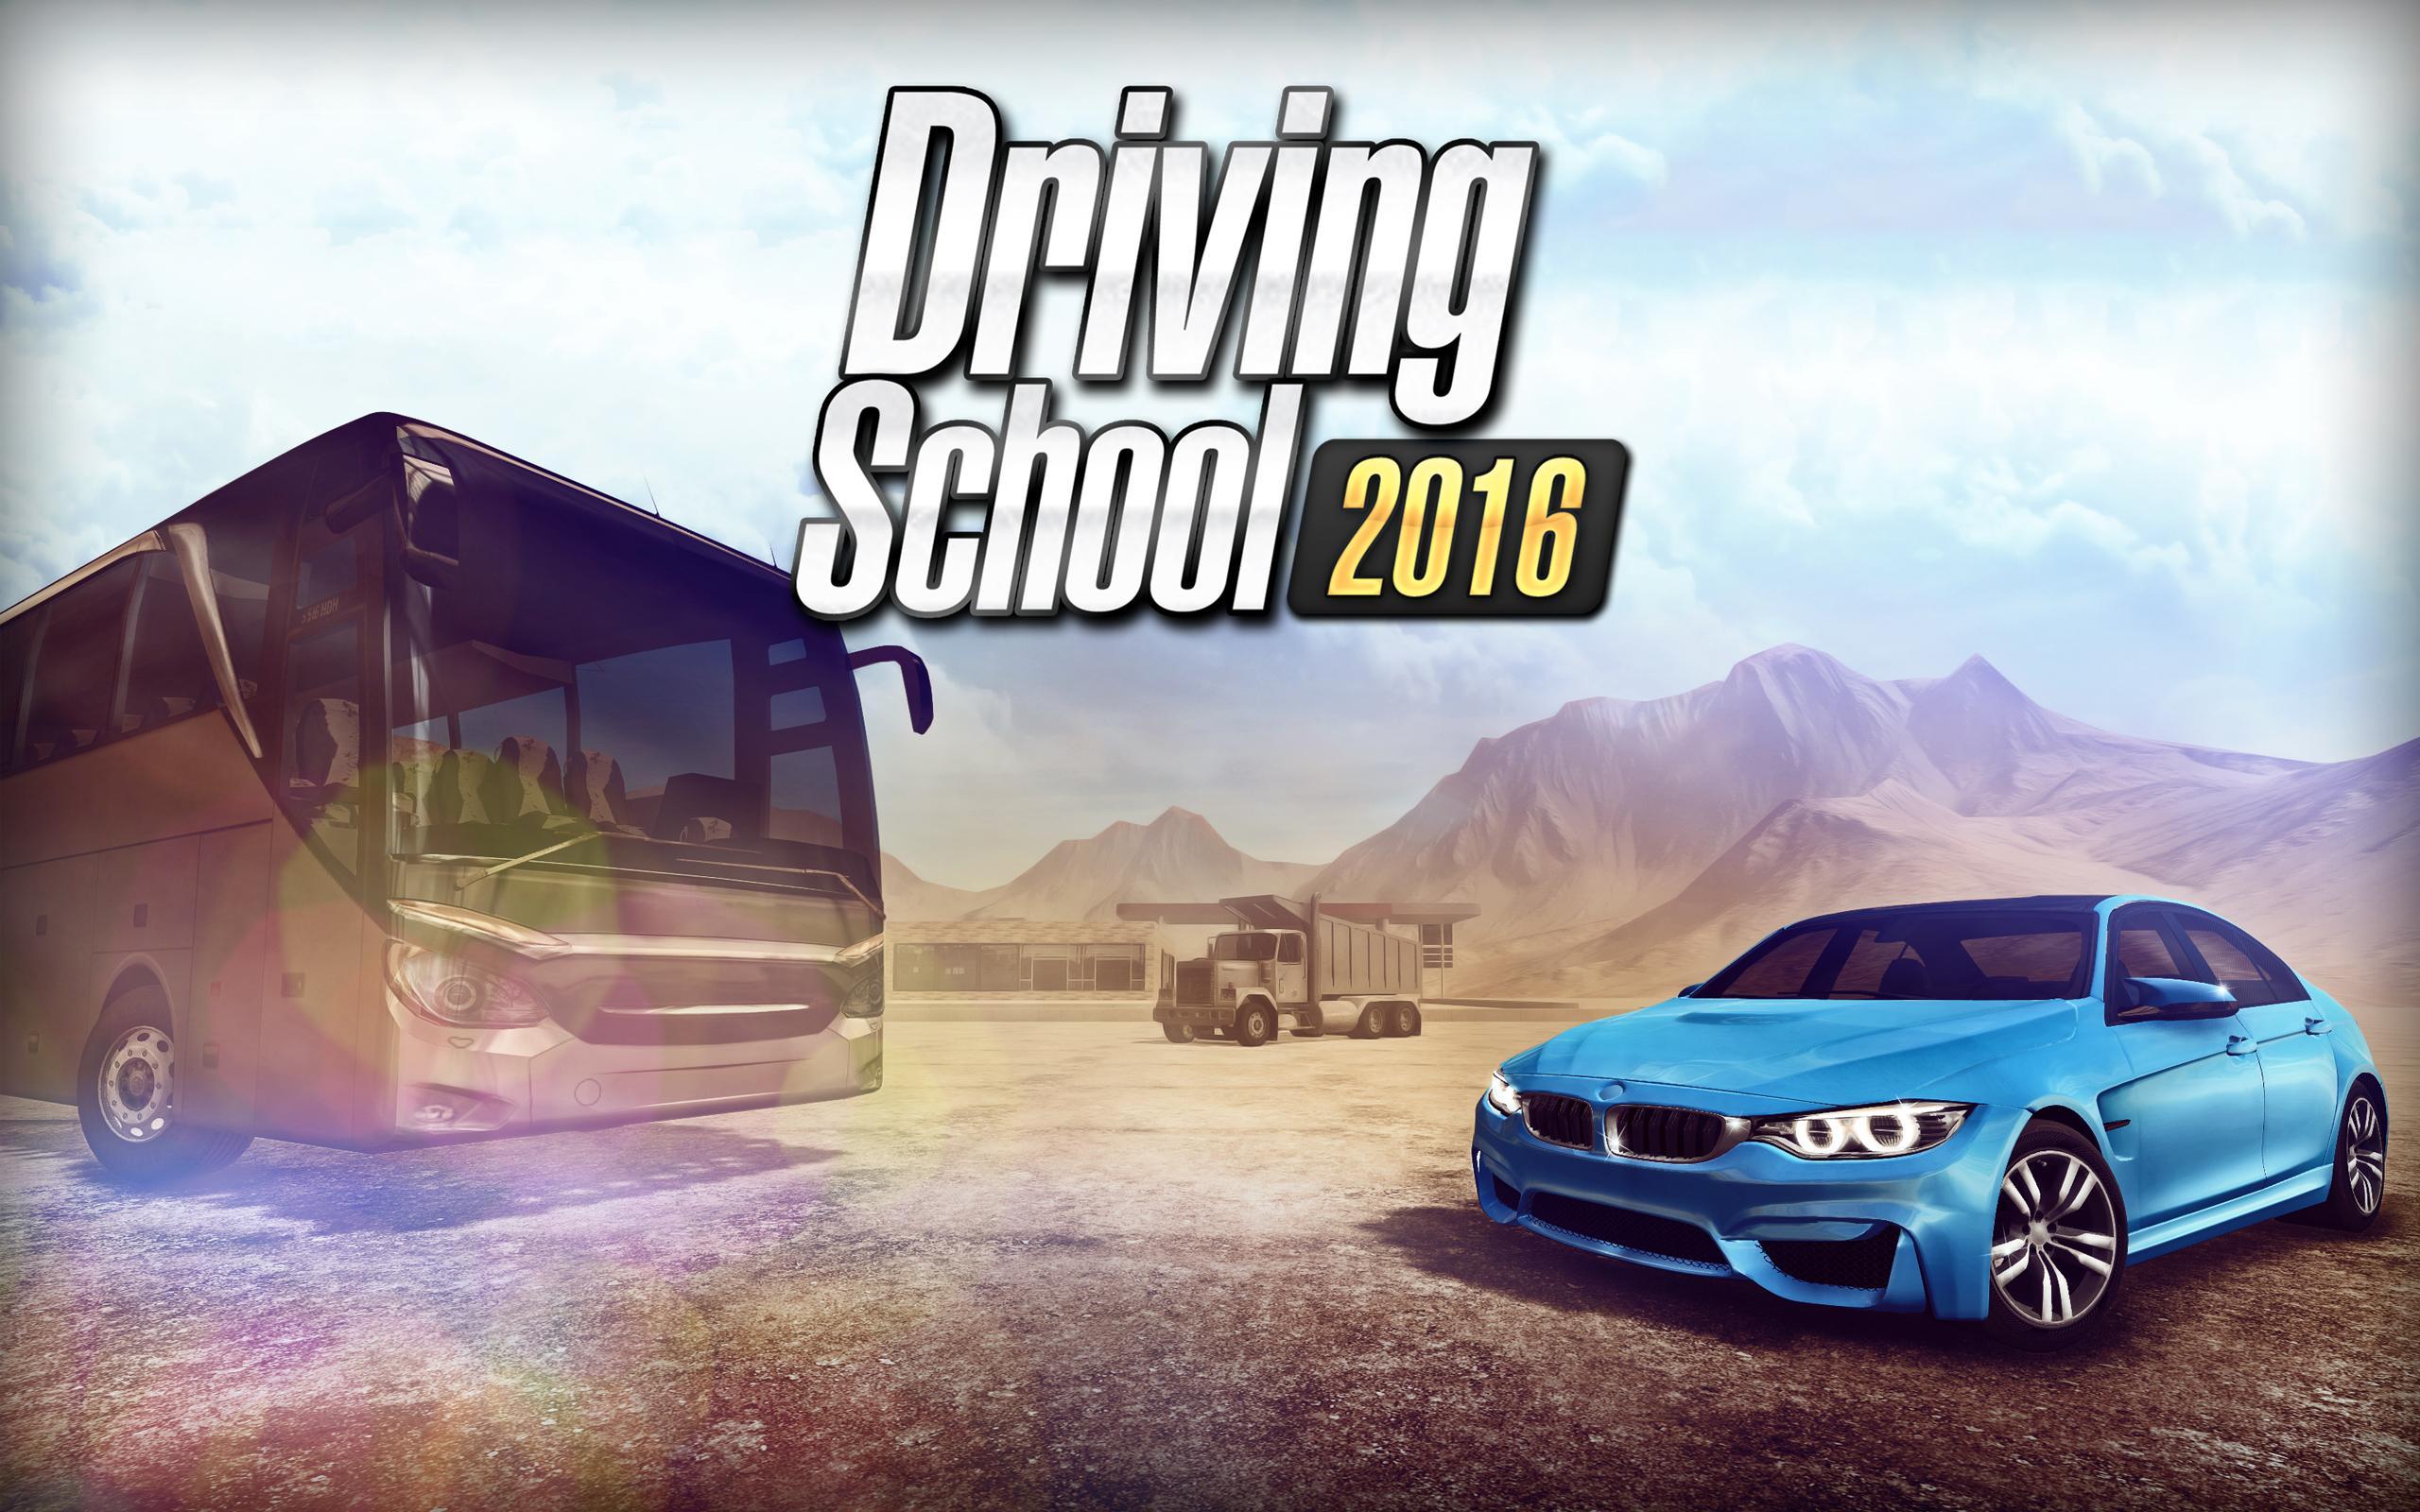 Driving School 2016 3.1 Screenshot 1